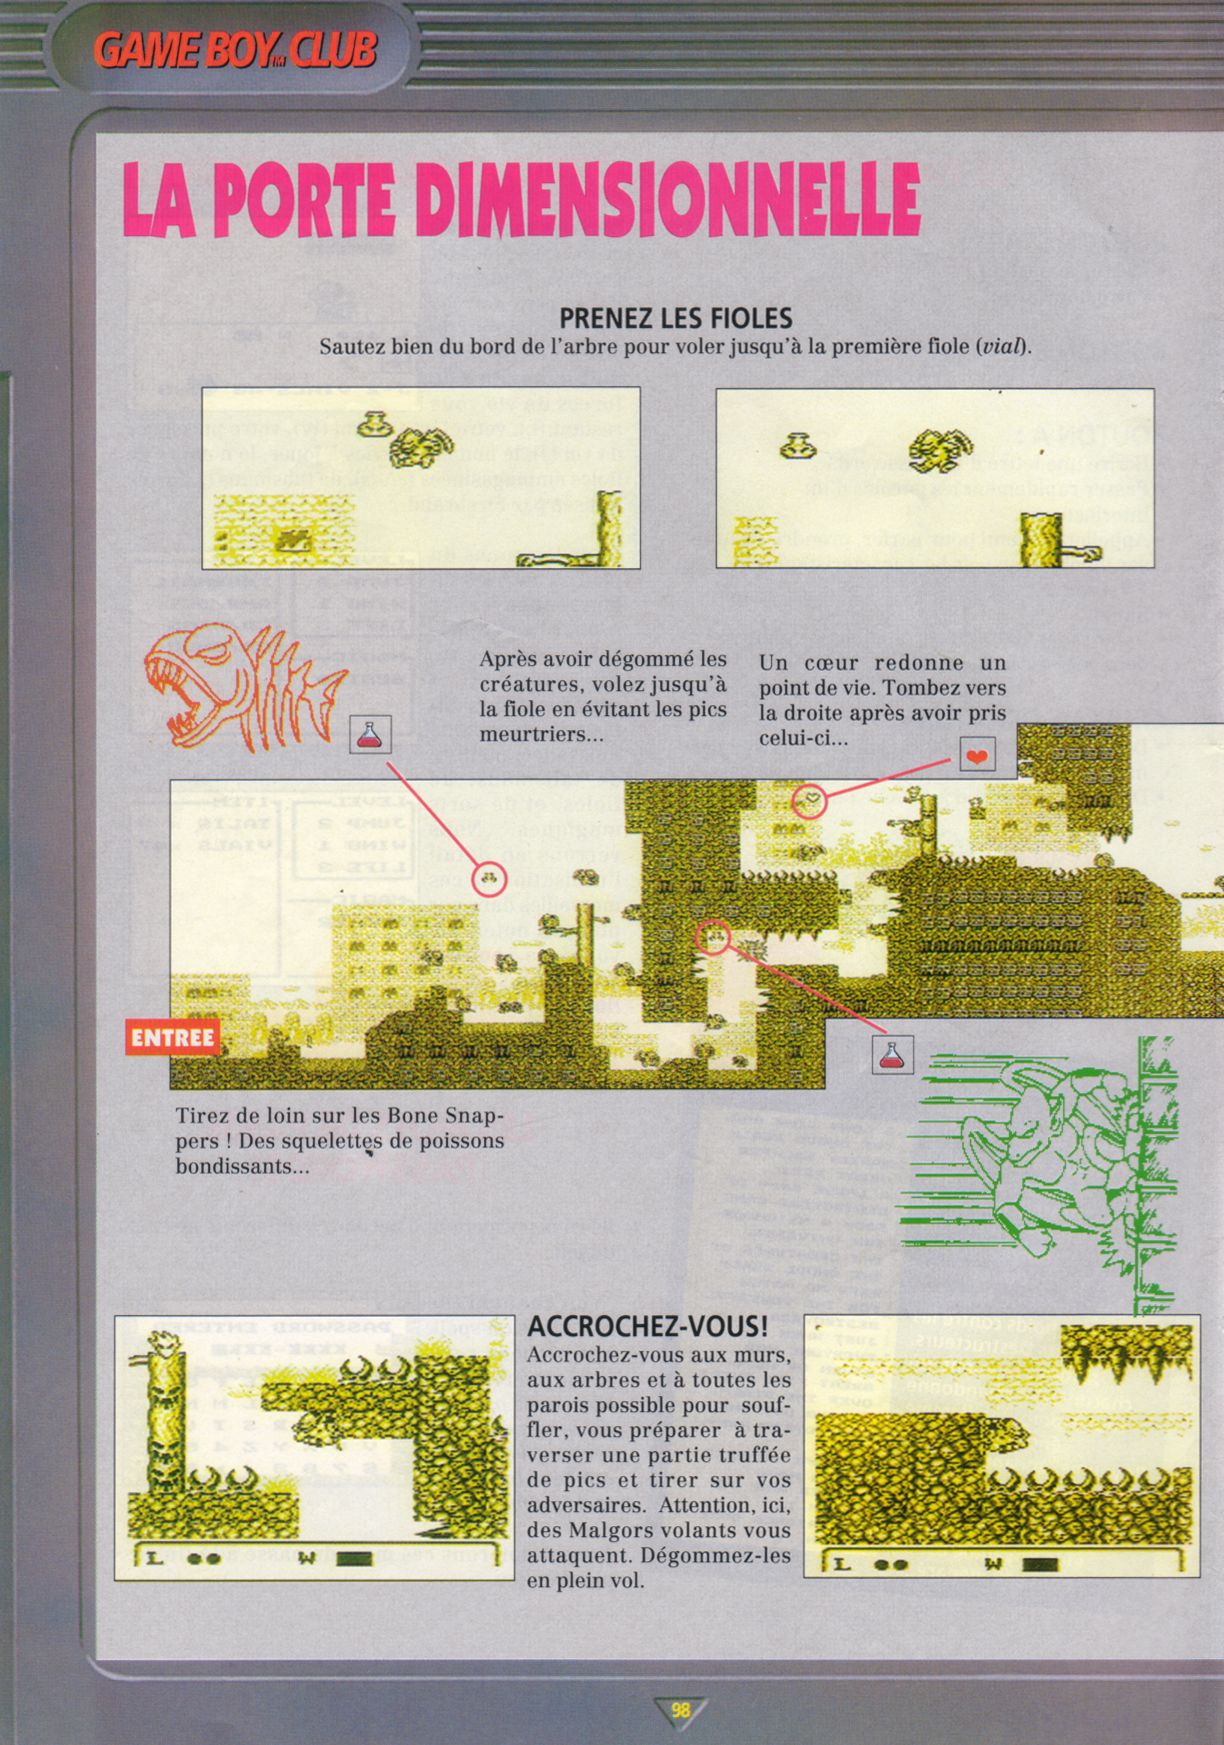 tests//1155/Nintendo Player 004 - Page 098 (1992-05-06).jpg